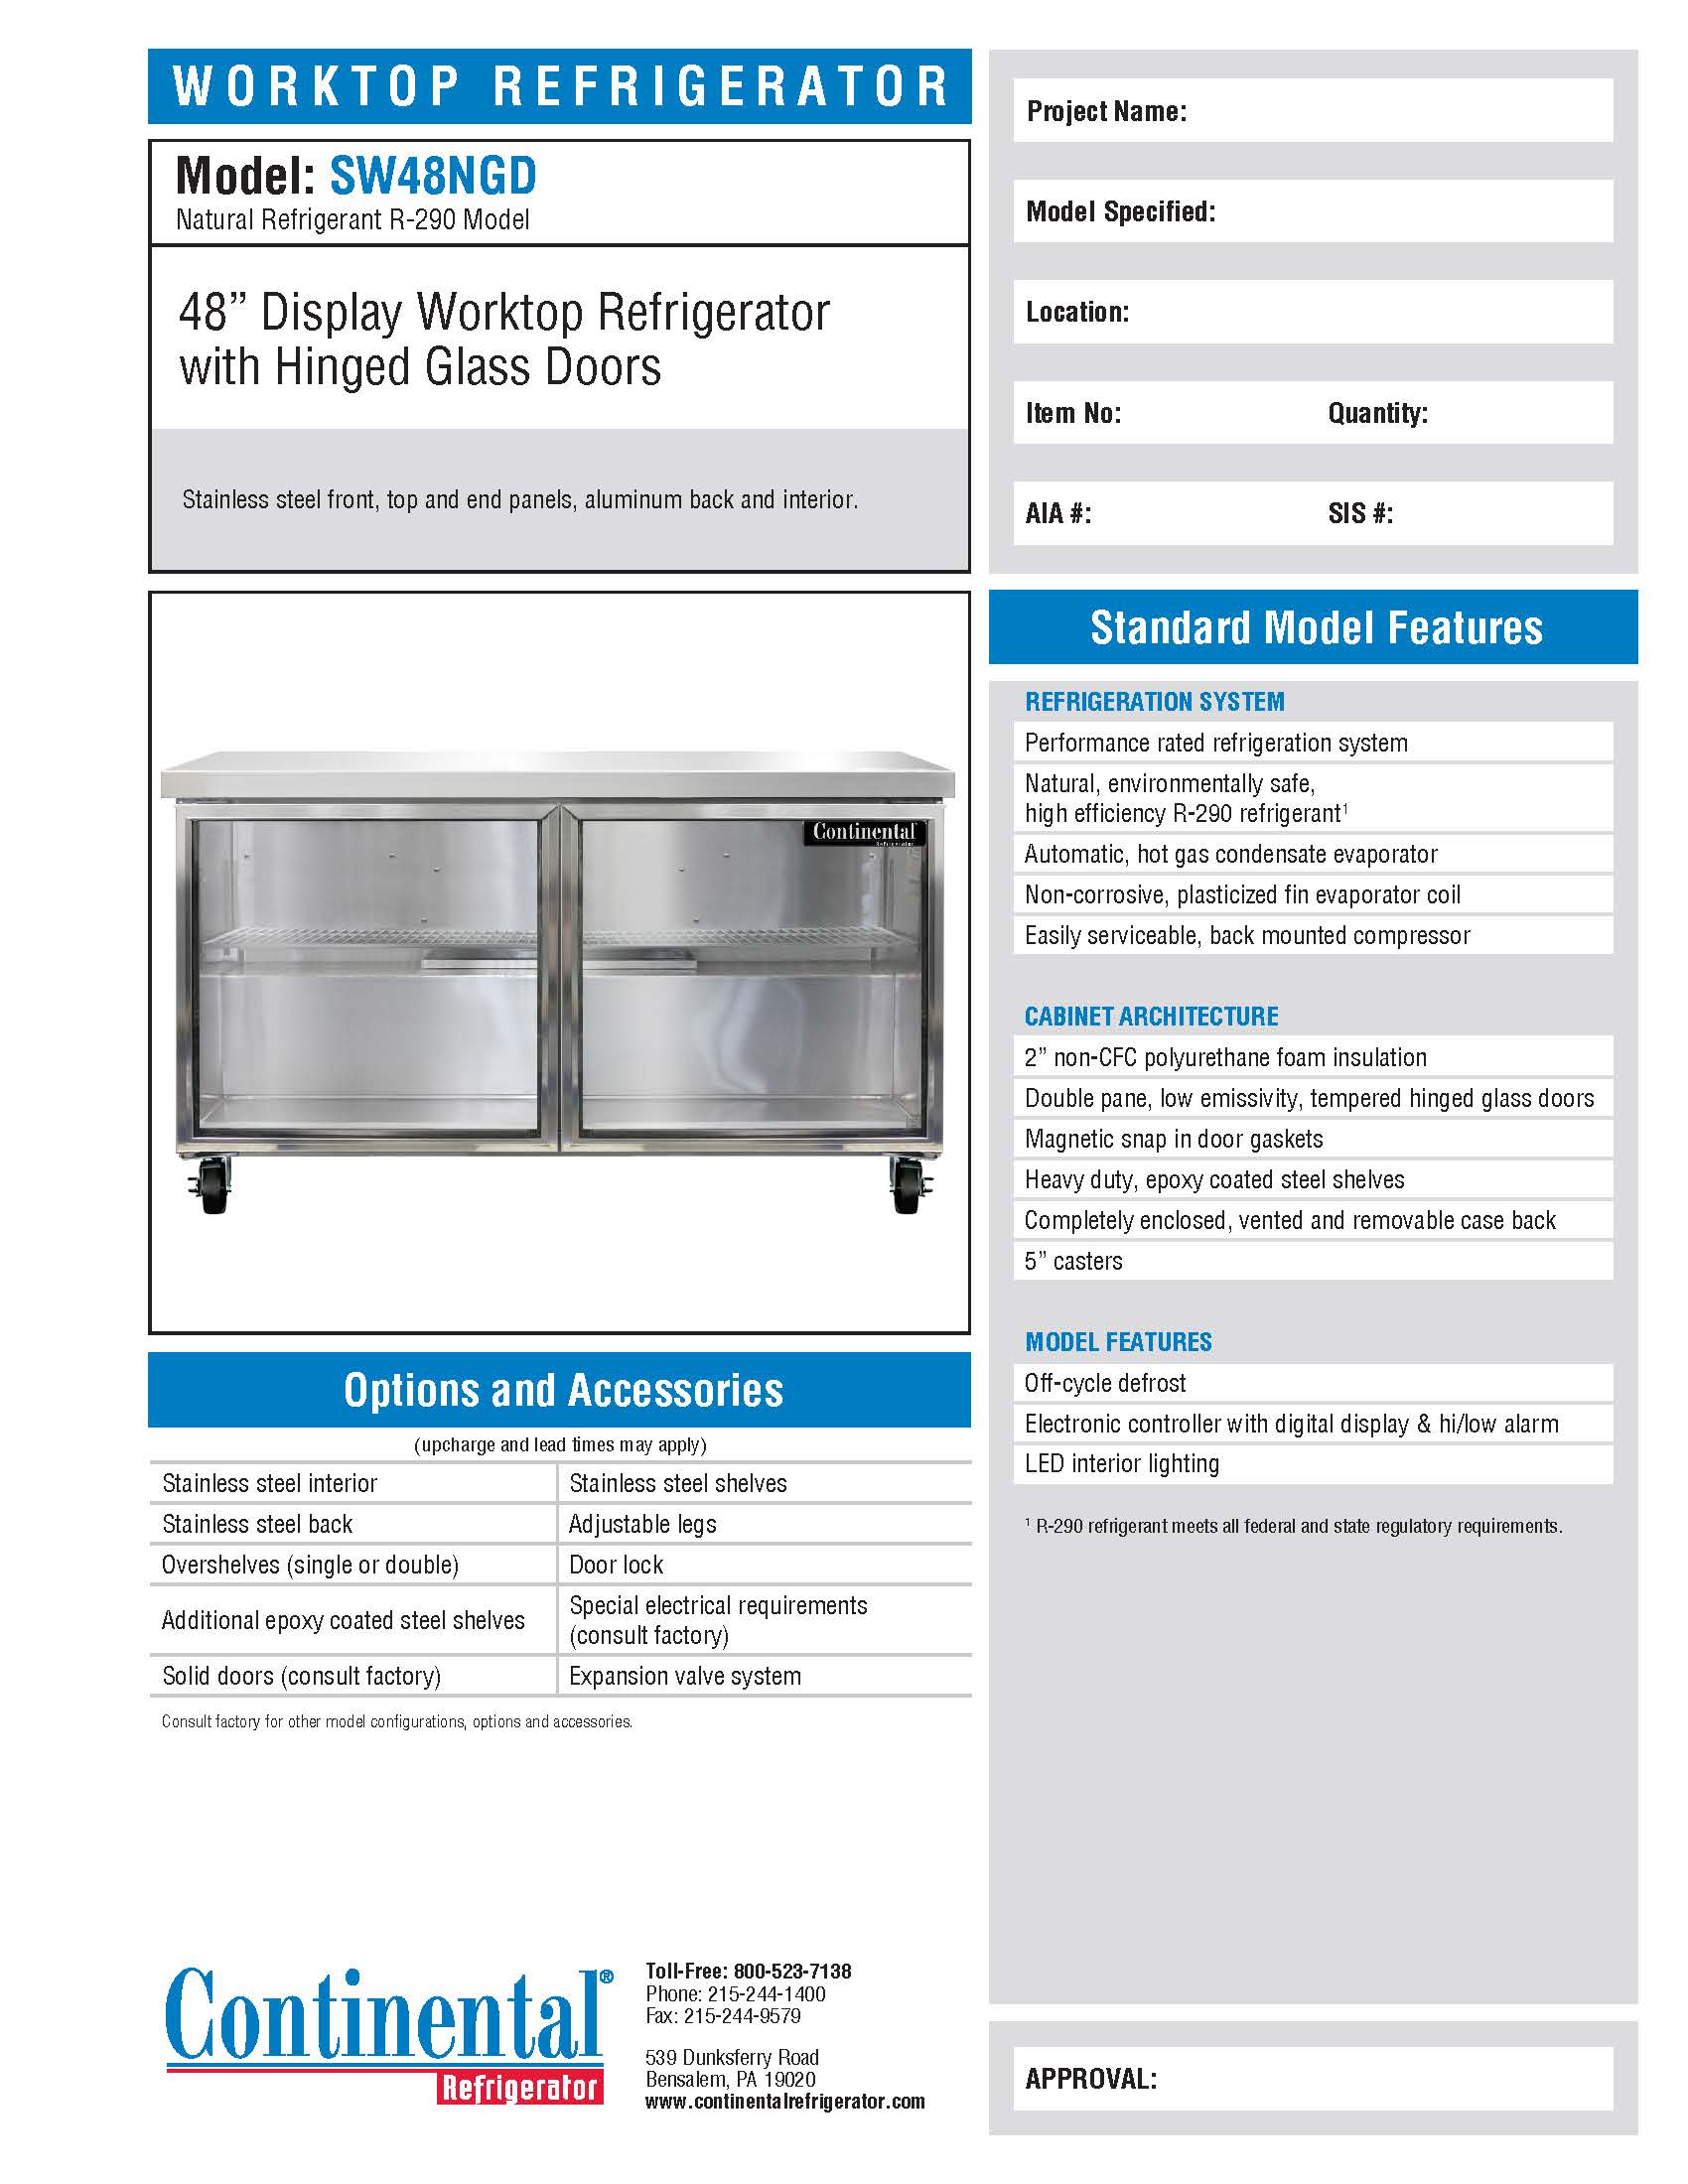 Display Worktop Refrigerator with Hinged Glass Doors | Continental Refrigerator | Model # SW48-SGD | Ser # 15779579 | 115 Volt